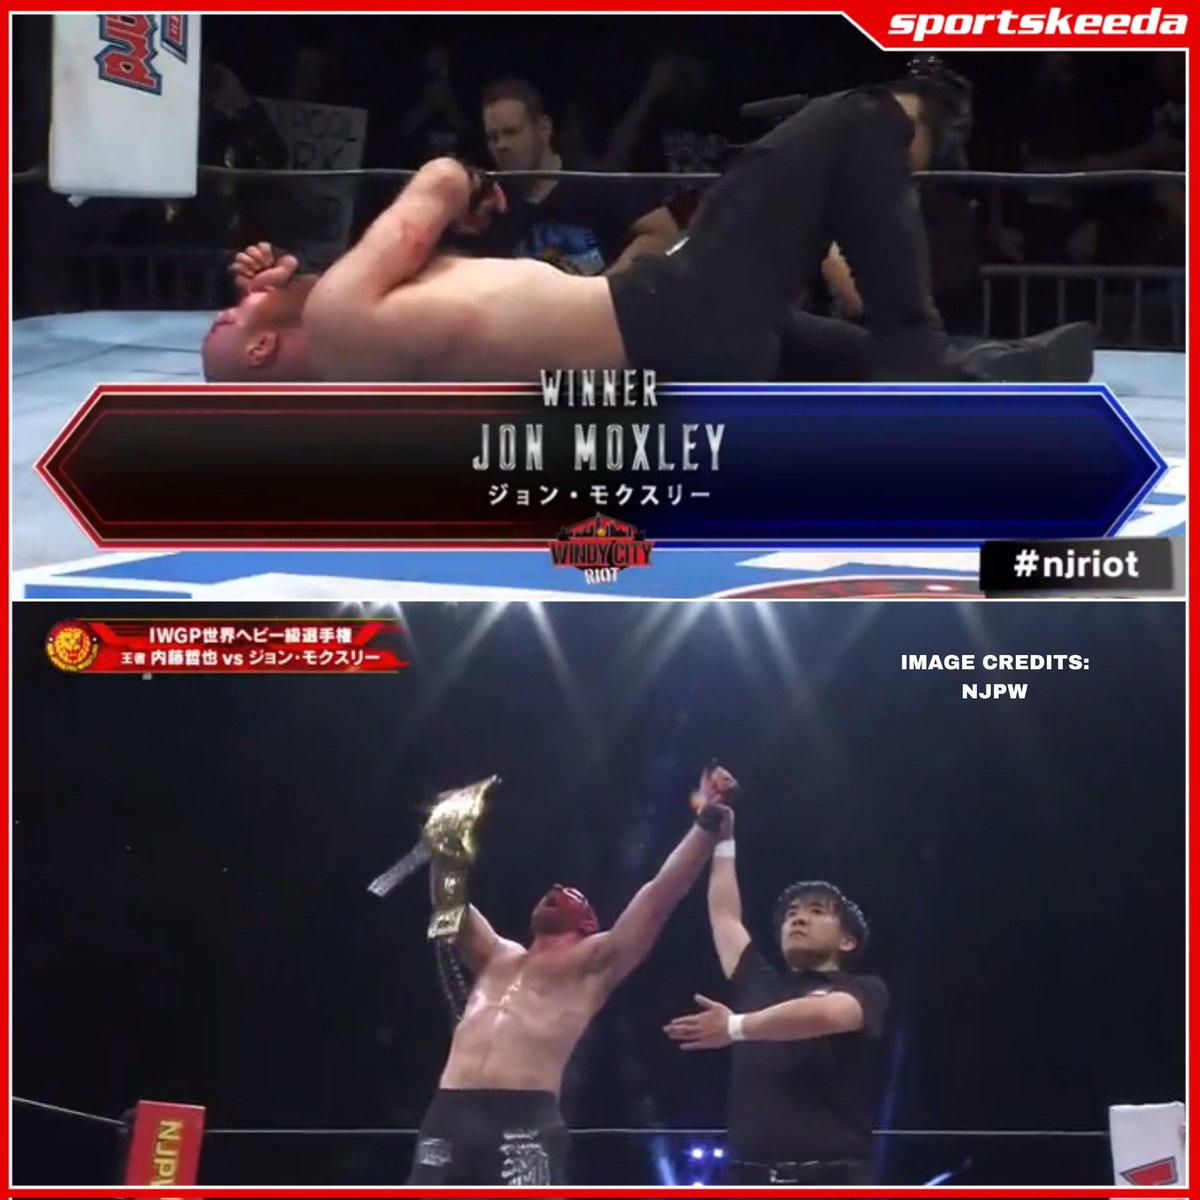 At #NJRiot, Jon Moxley defeated Tetsuya Naito to become the NEW IWGP World Heavyweight Champion. 🏆